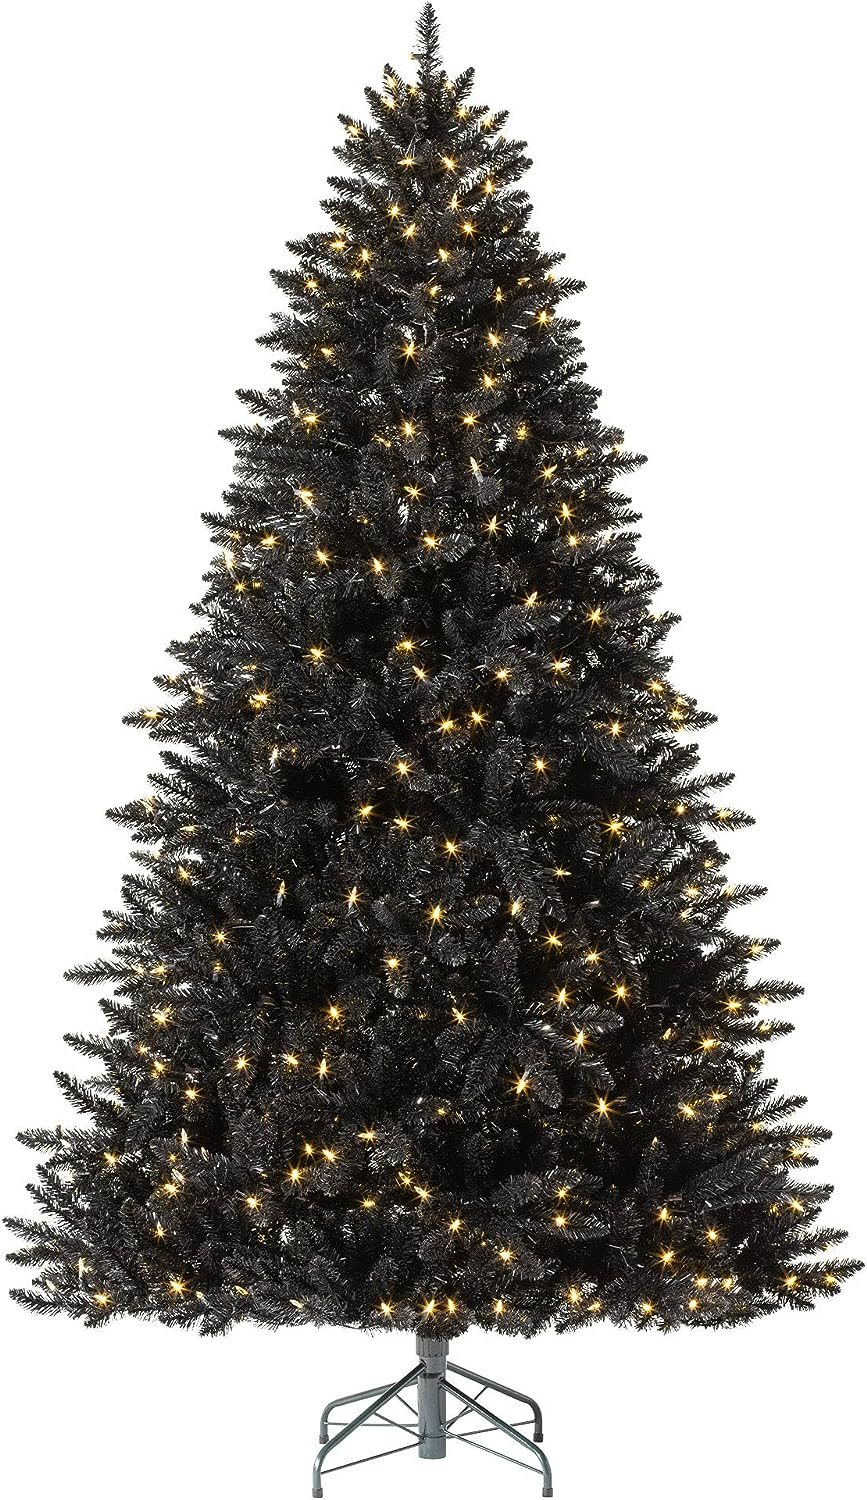 Black beauty Christmas tree